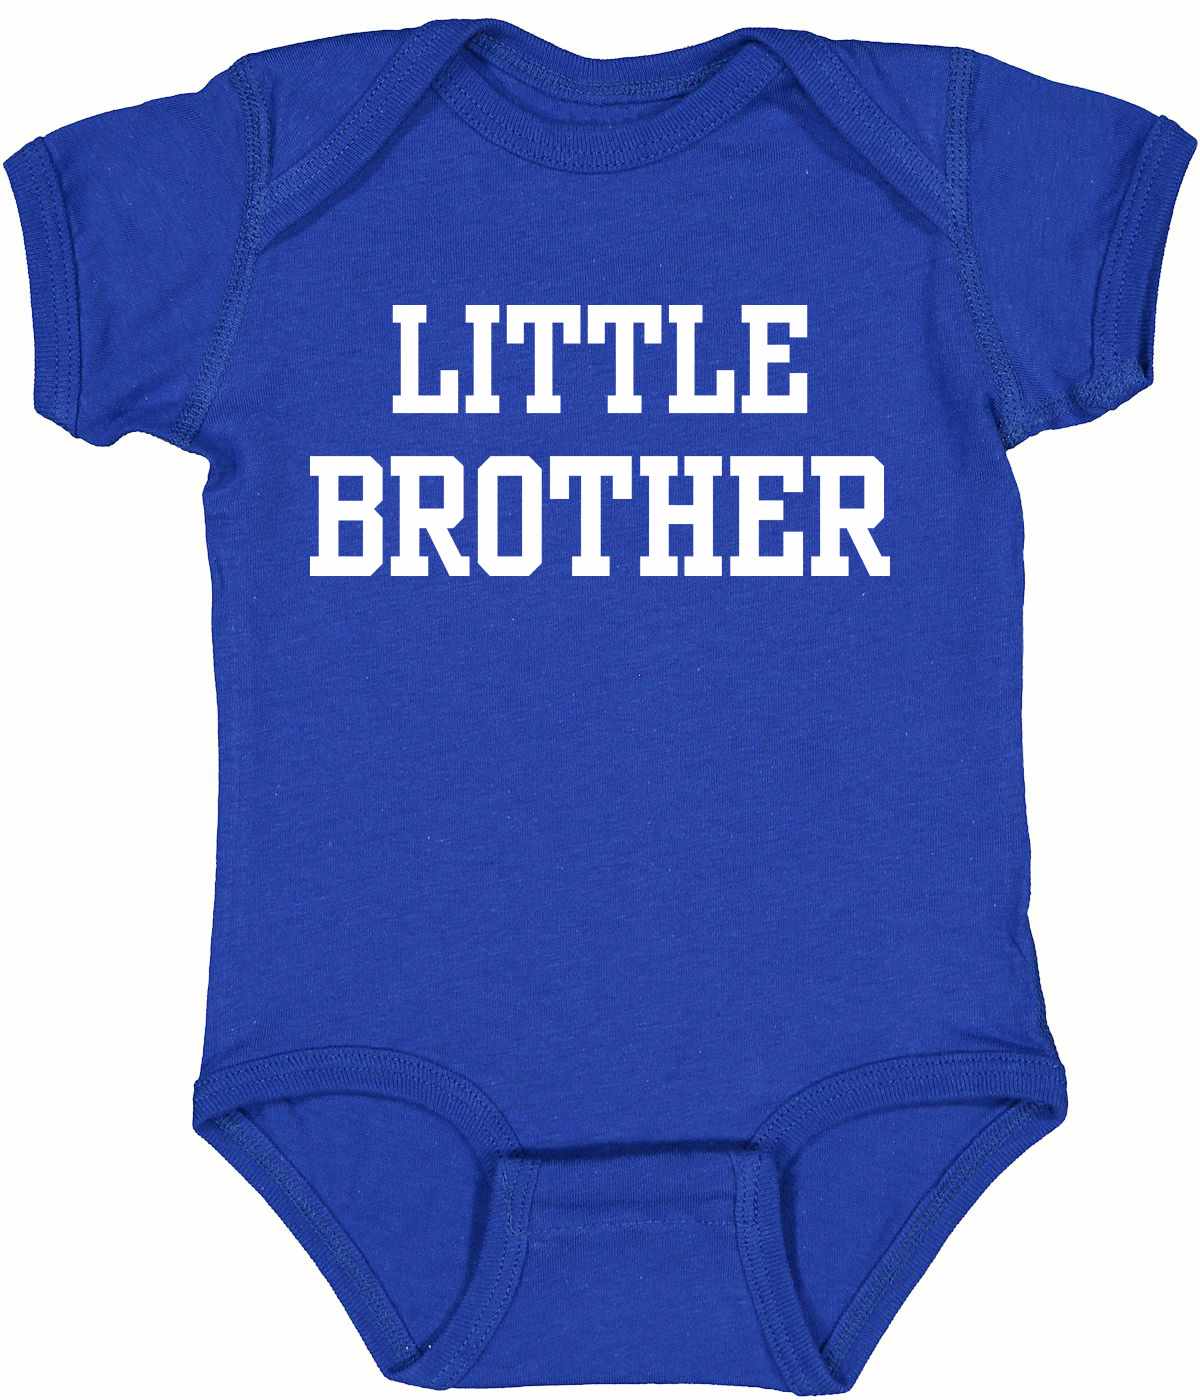 LITTLE BROTHER Infant BodySuit